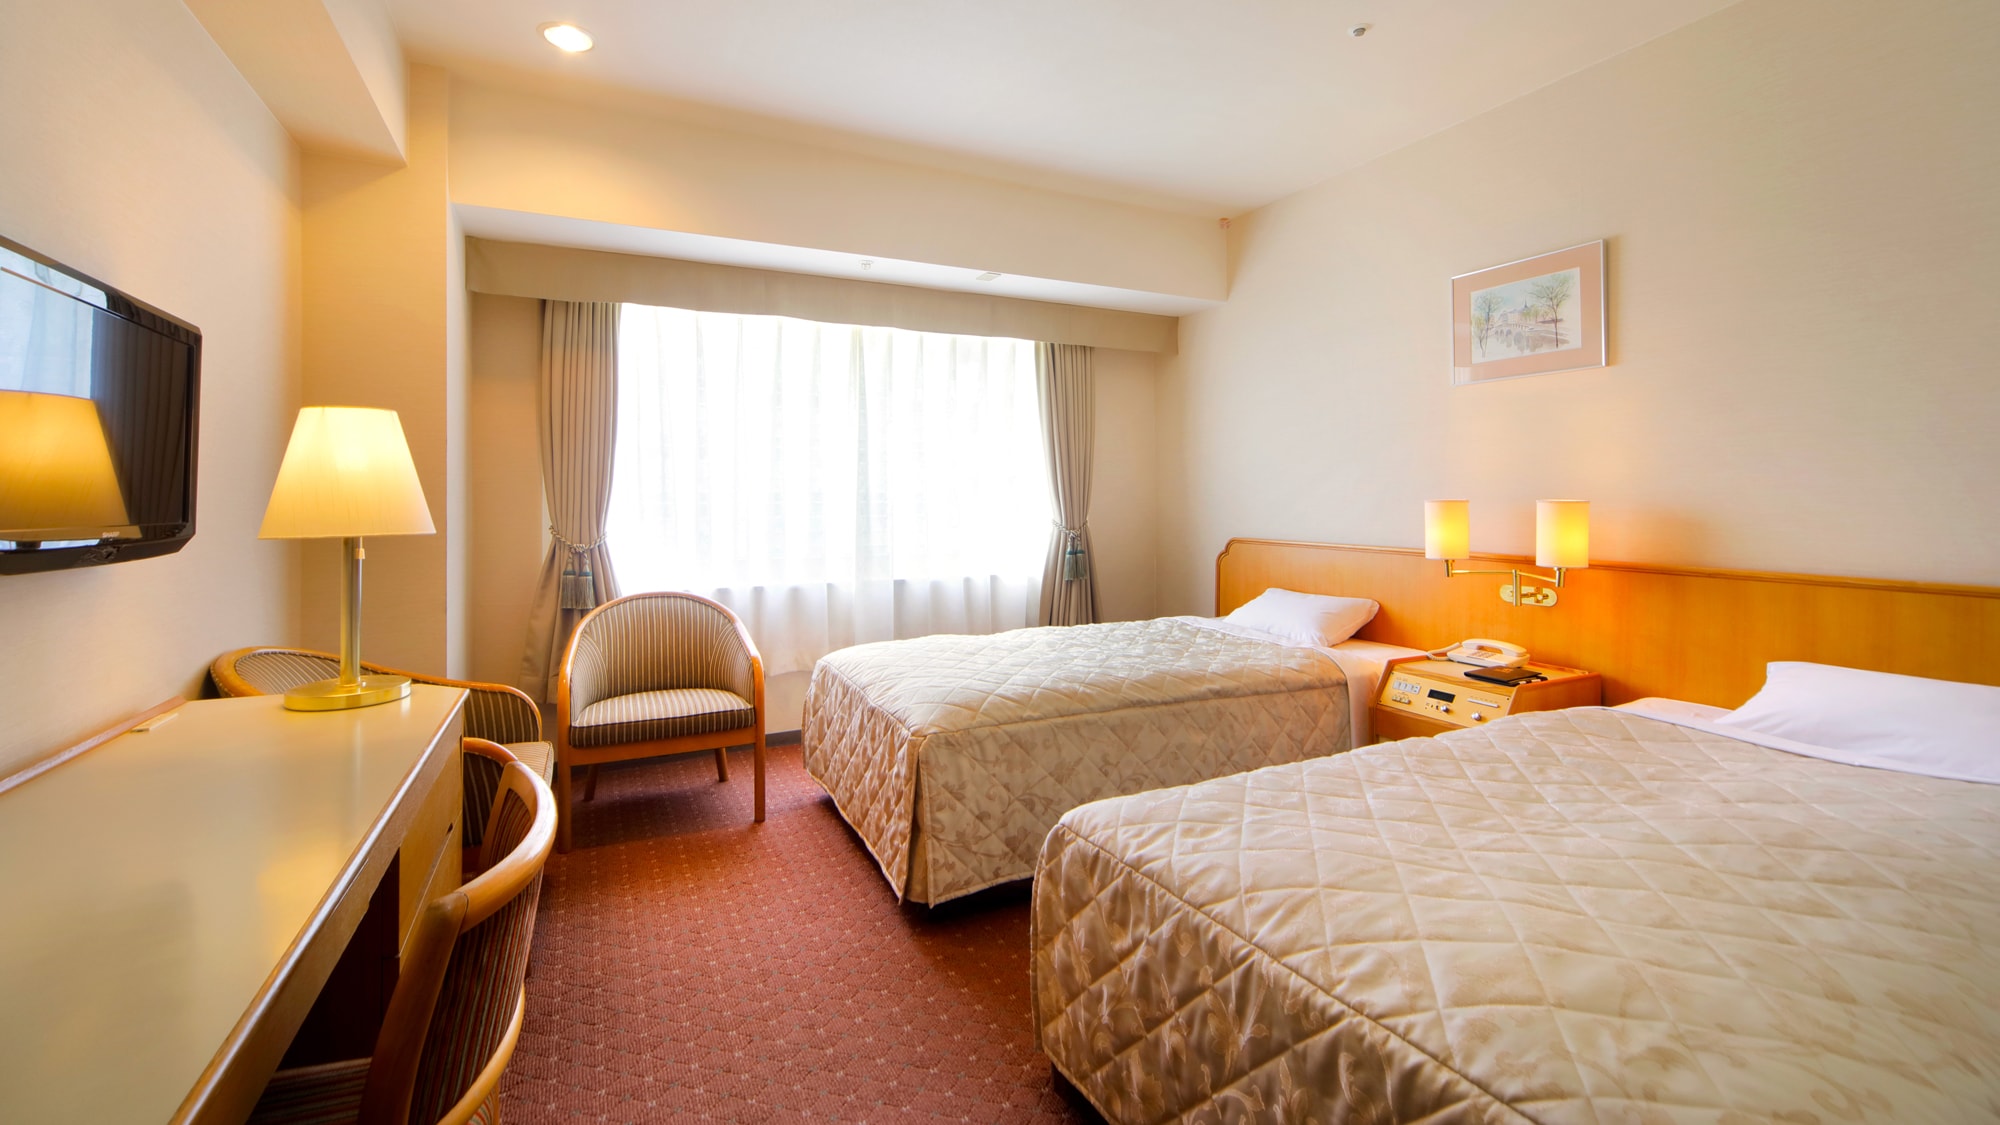 ☆ Standard twin room [23 square meters, bed width 110 cm]